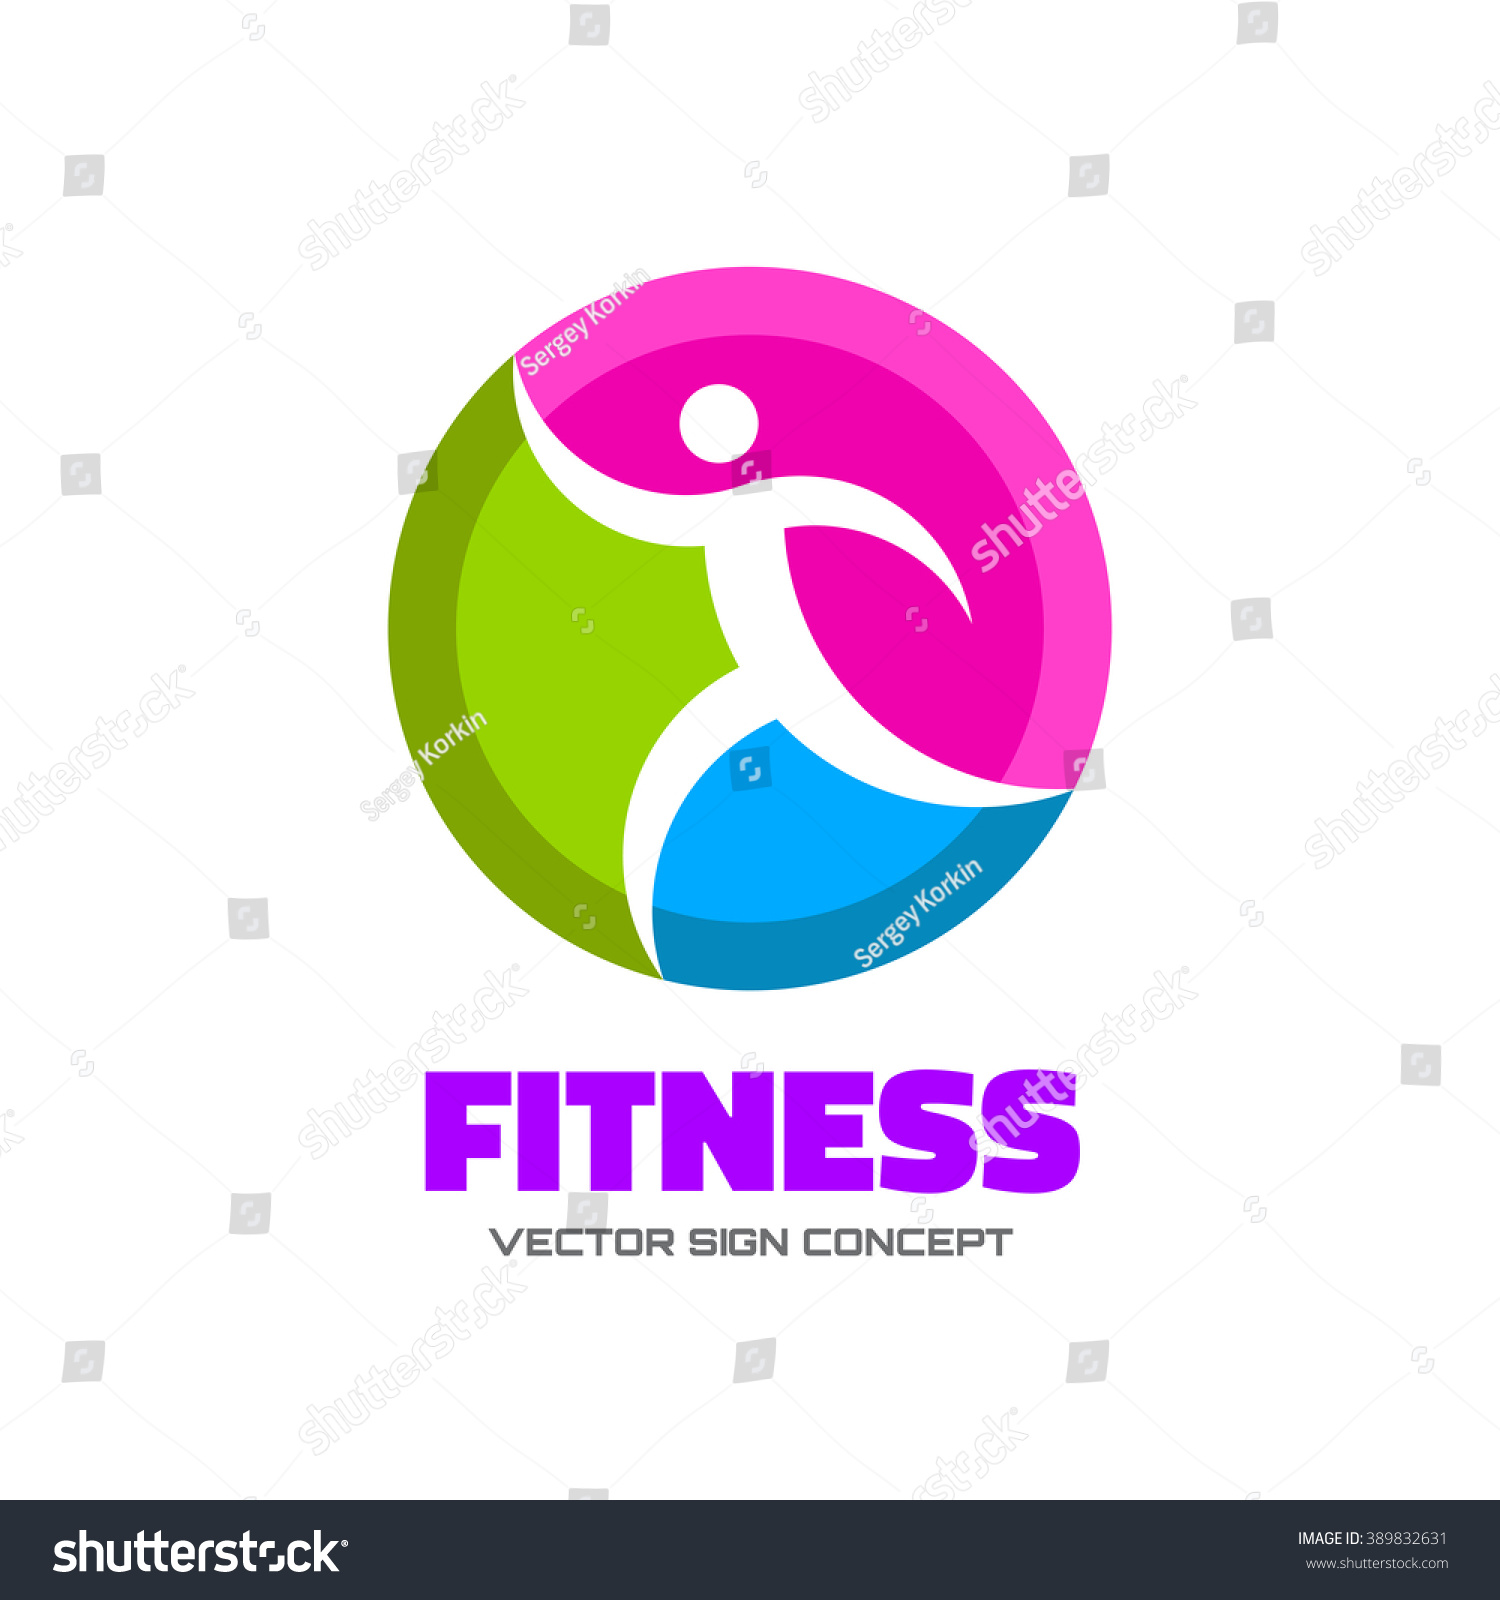 Fitness Vector Logo Concept Illustration Human Stock Vector (Royalty ...